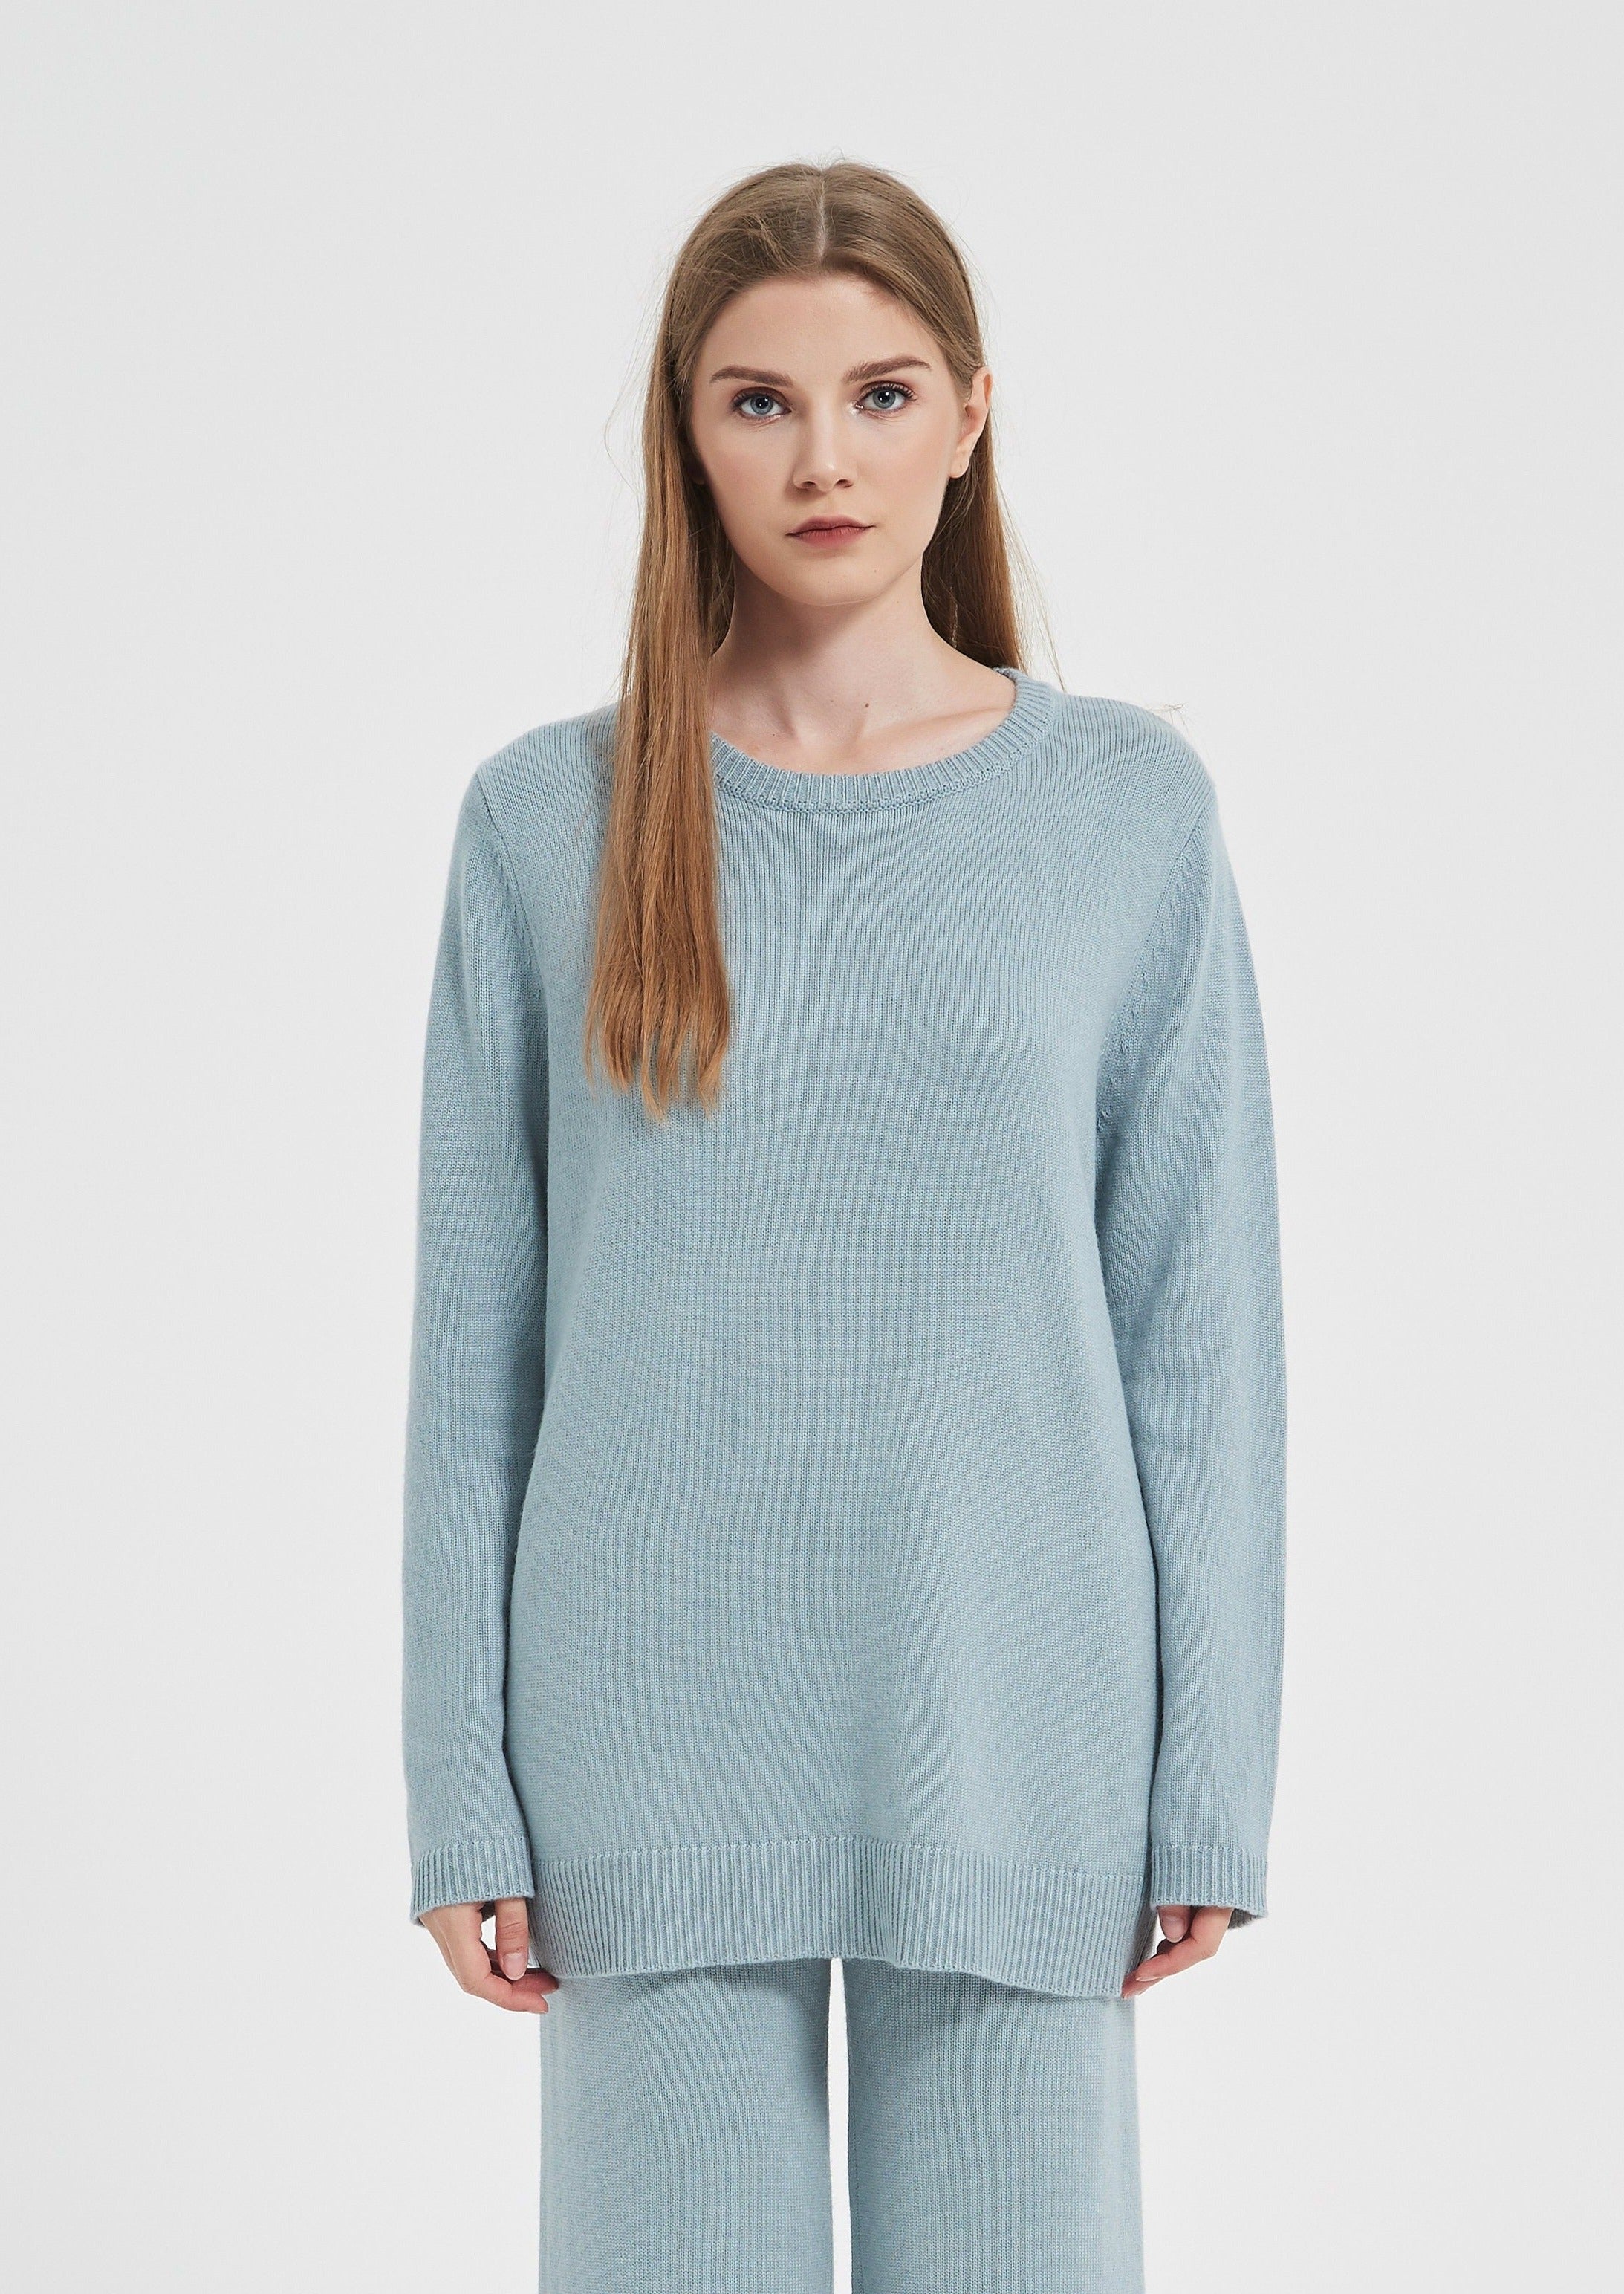 Elandra Knit Sweater - Baby blue